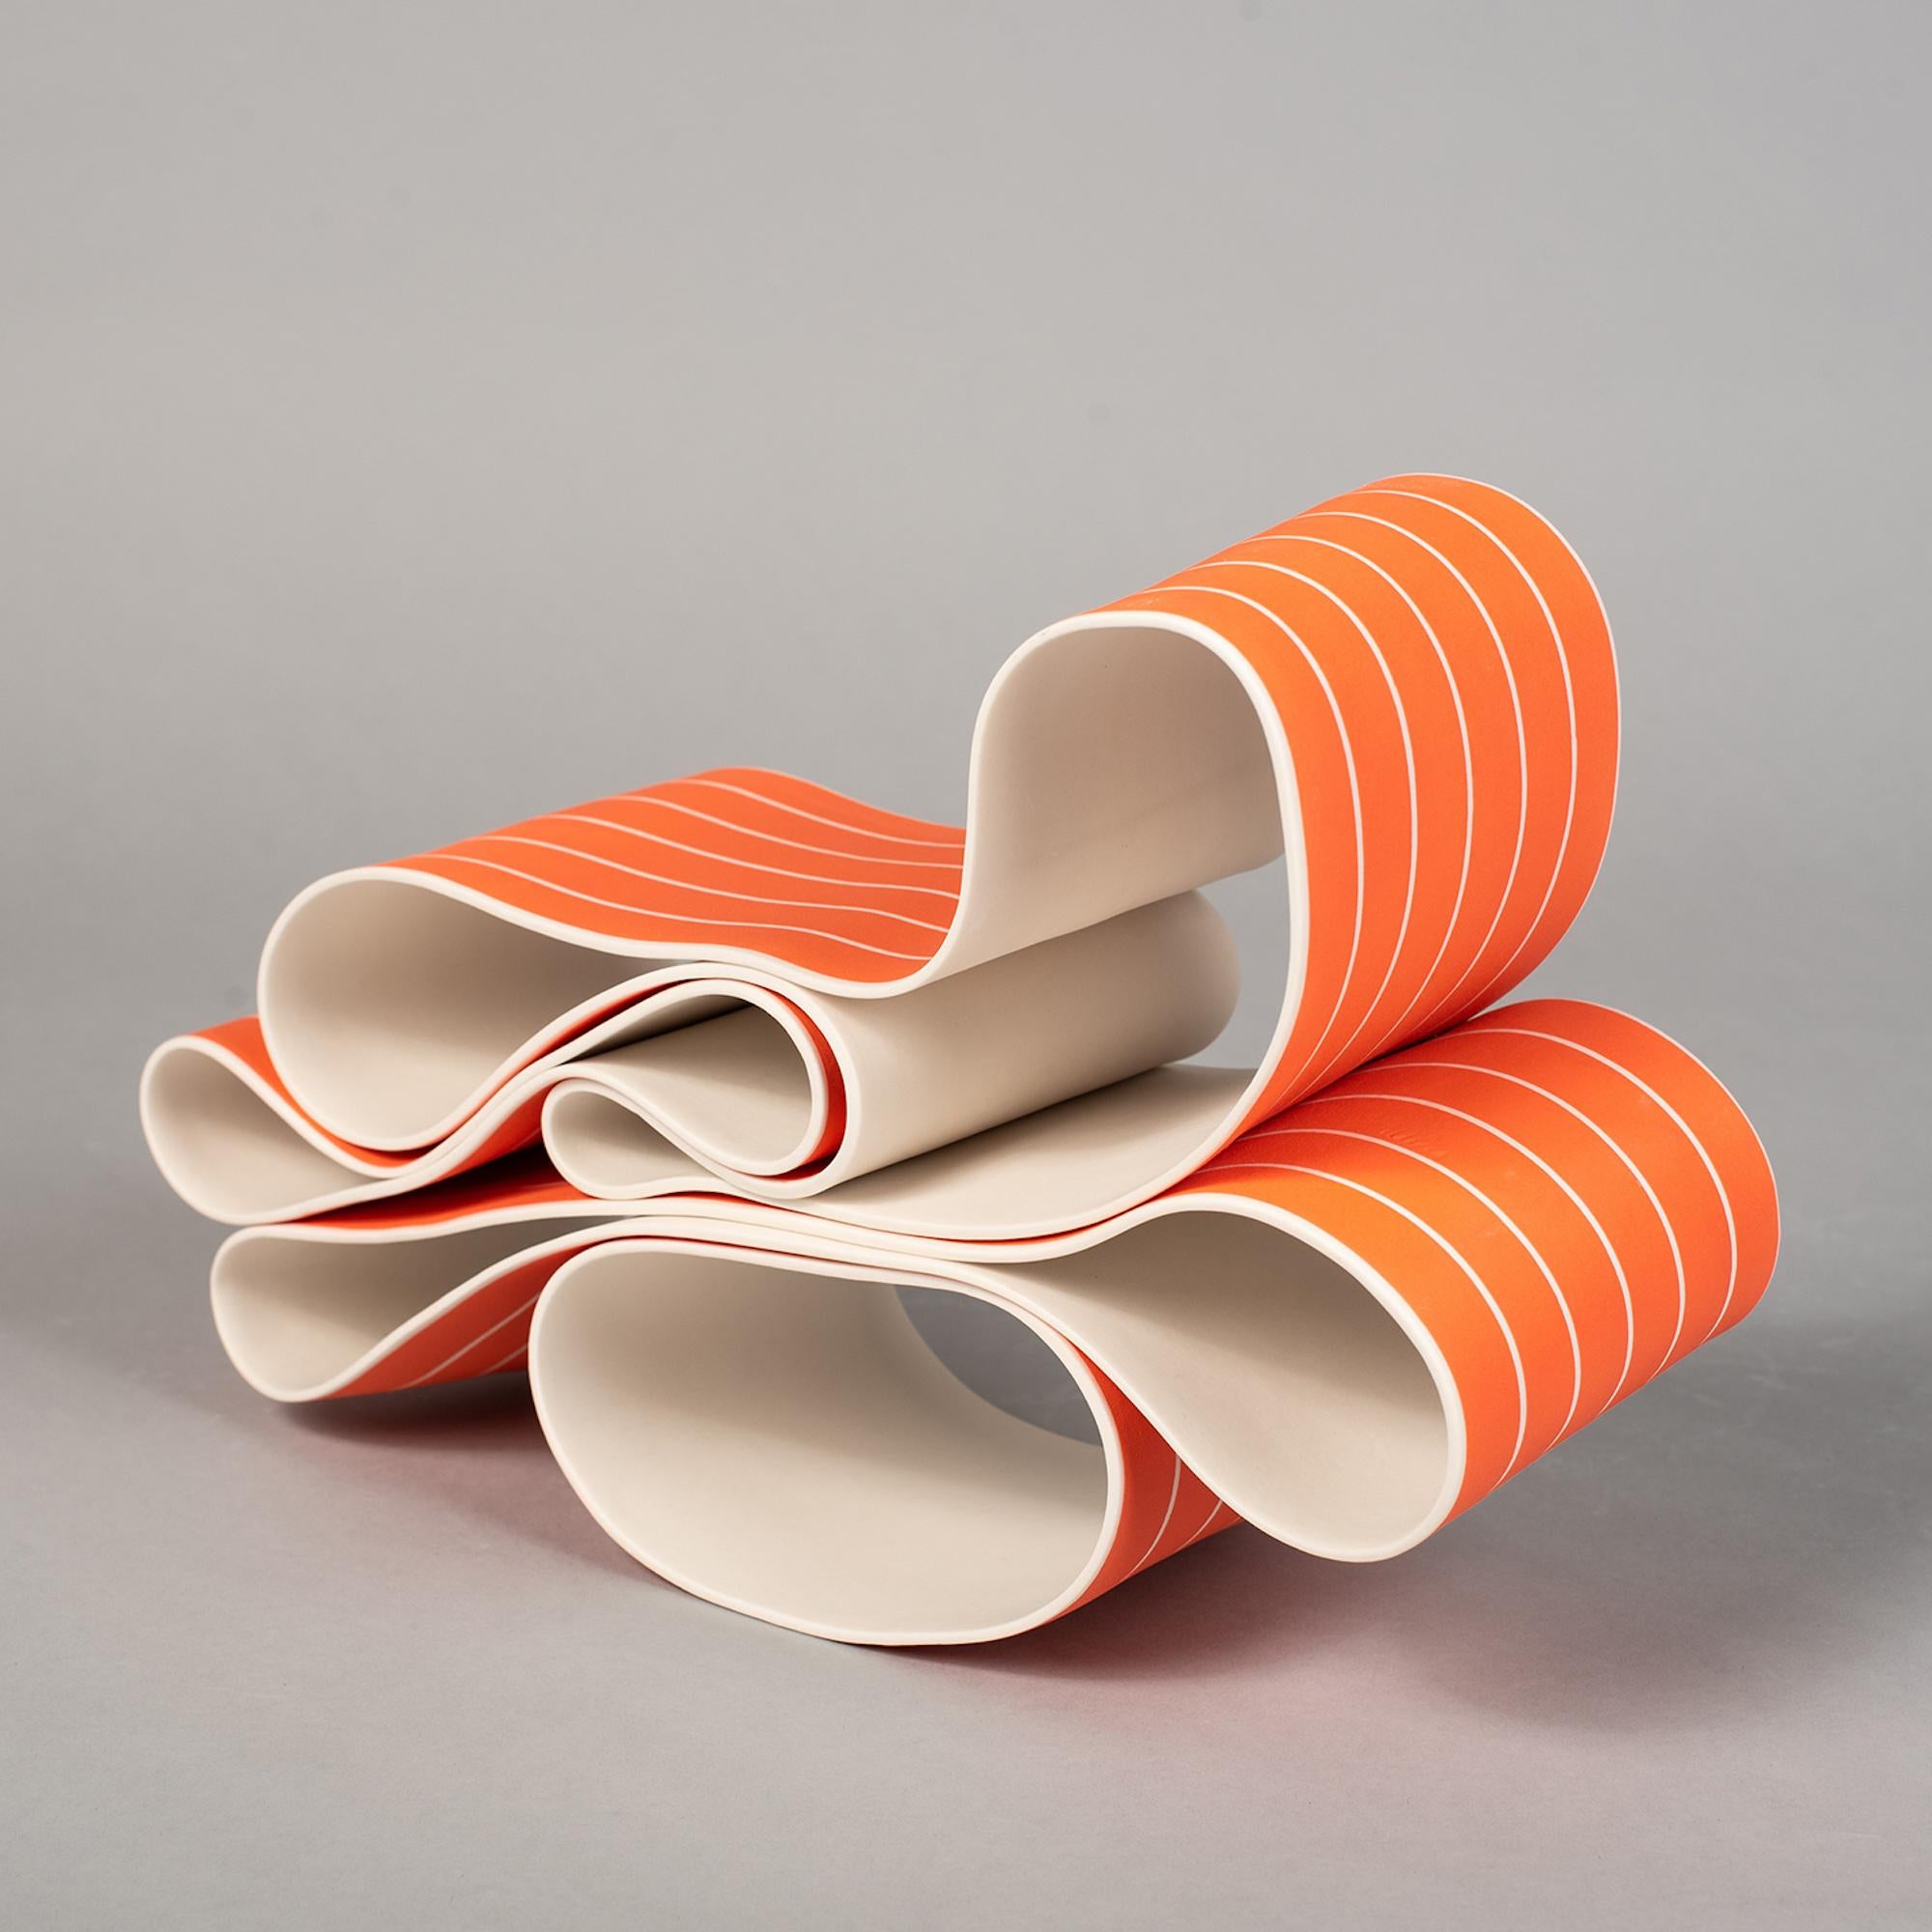 Folding in Motion 11 by Simcha Even-Chen - Porcelain sculpture, orange lines For Sale 1